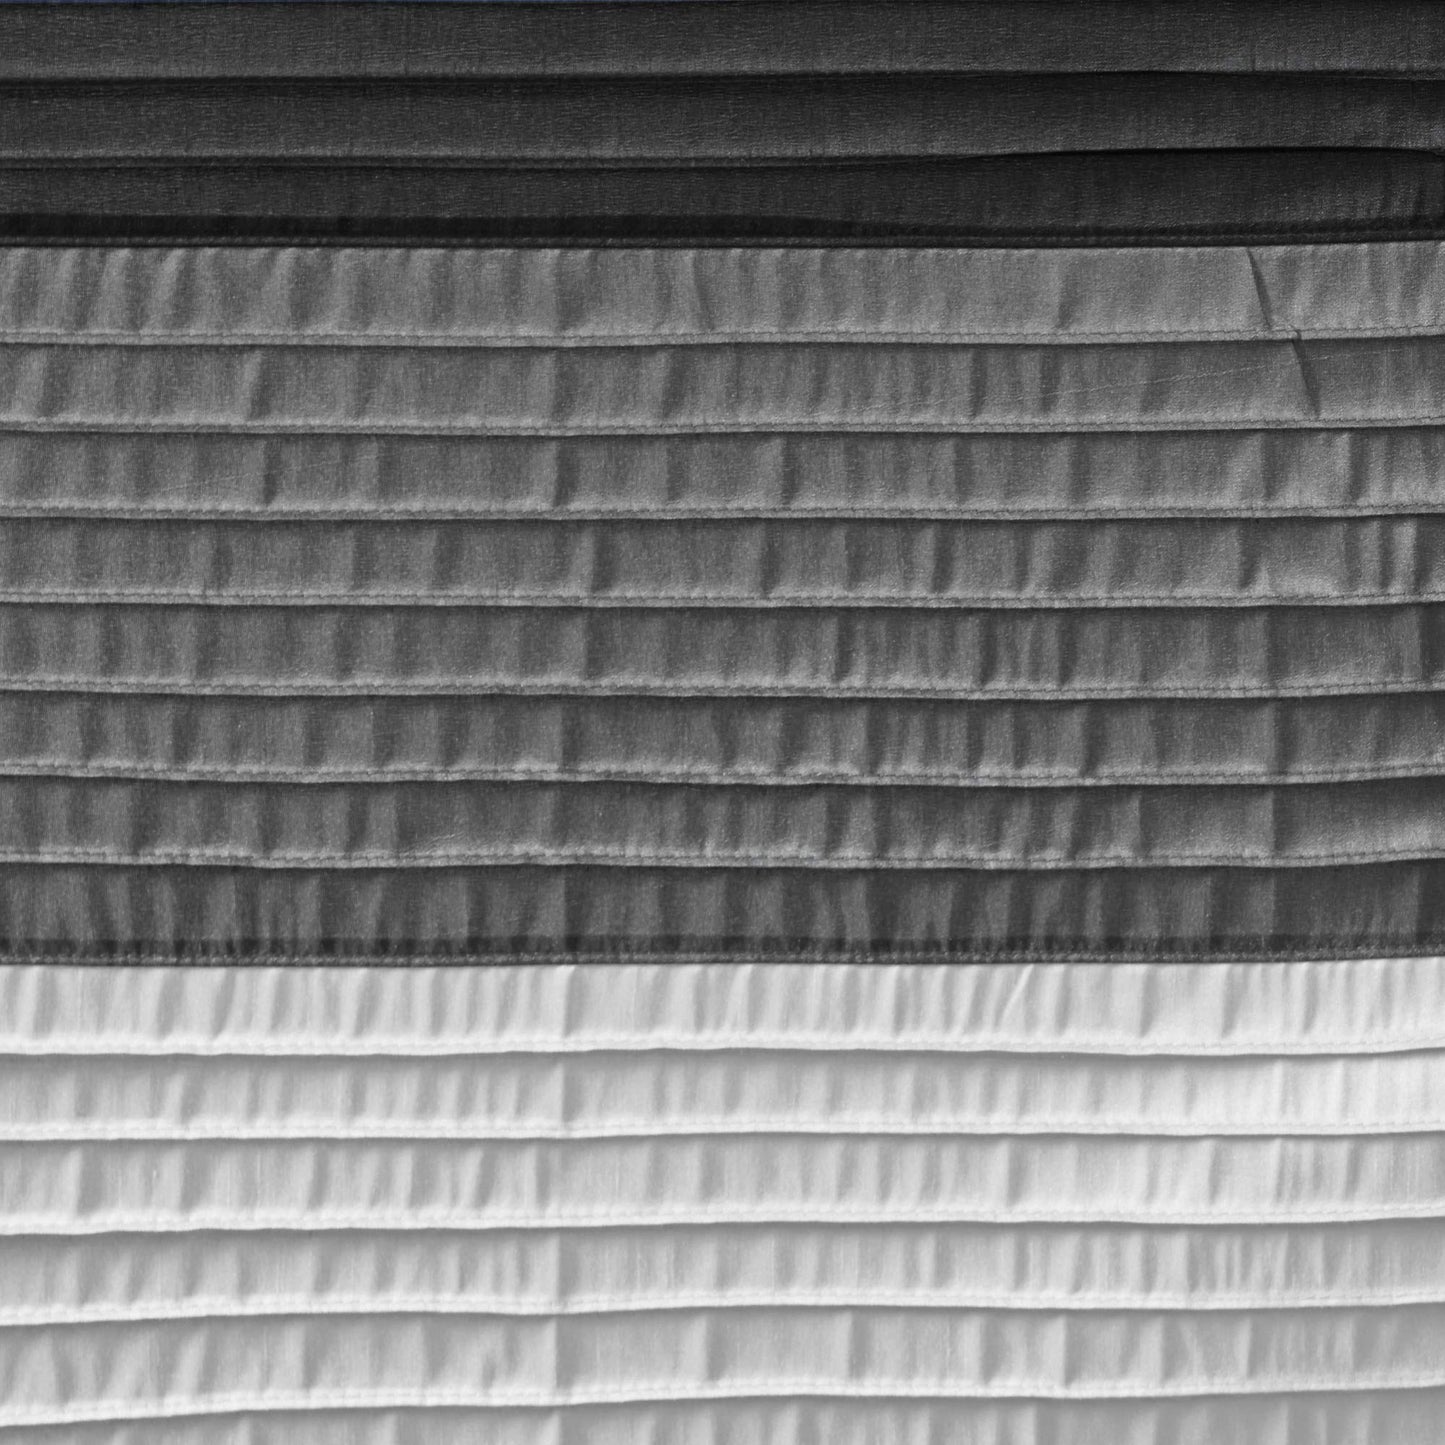 Madison Park Amherst Faux Silk Shower Curtain 72x72" Black